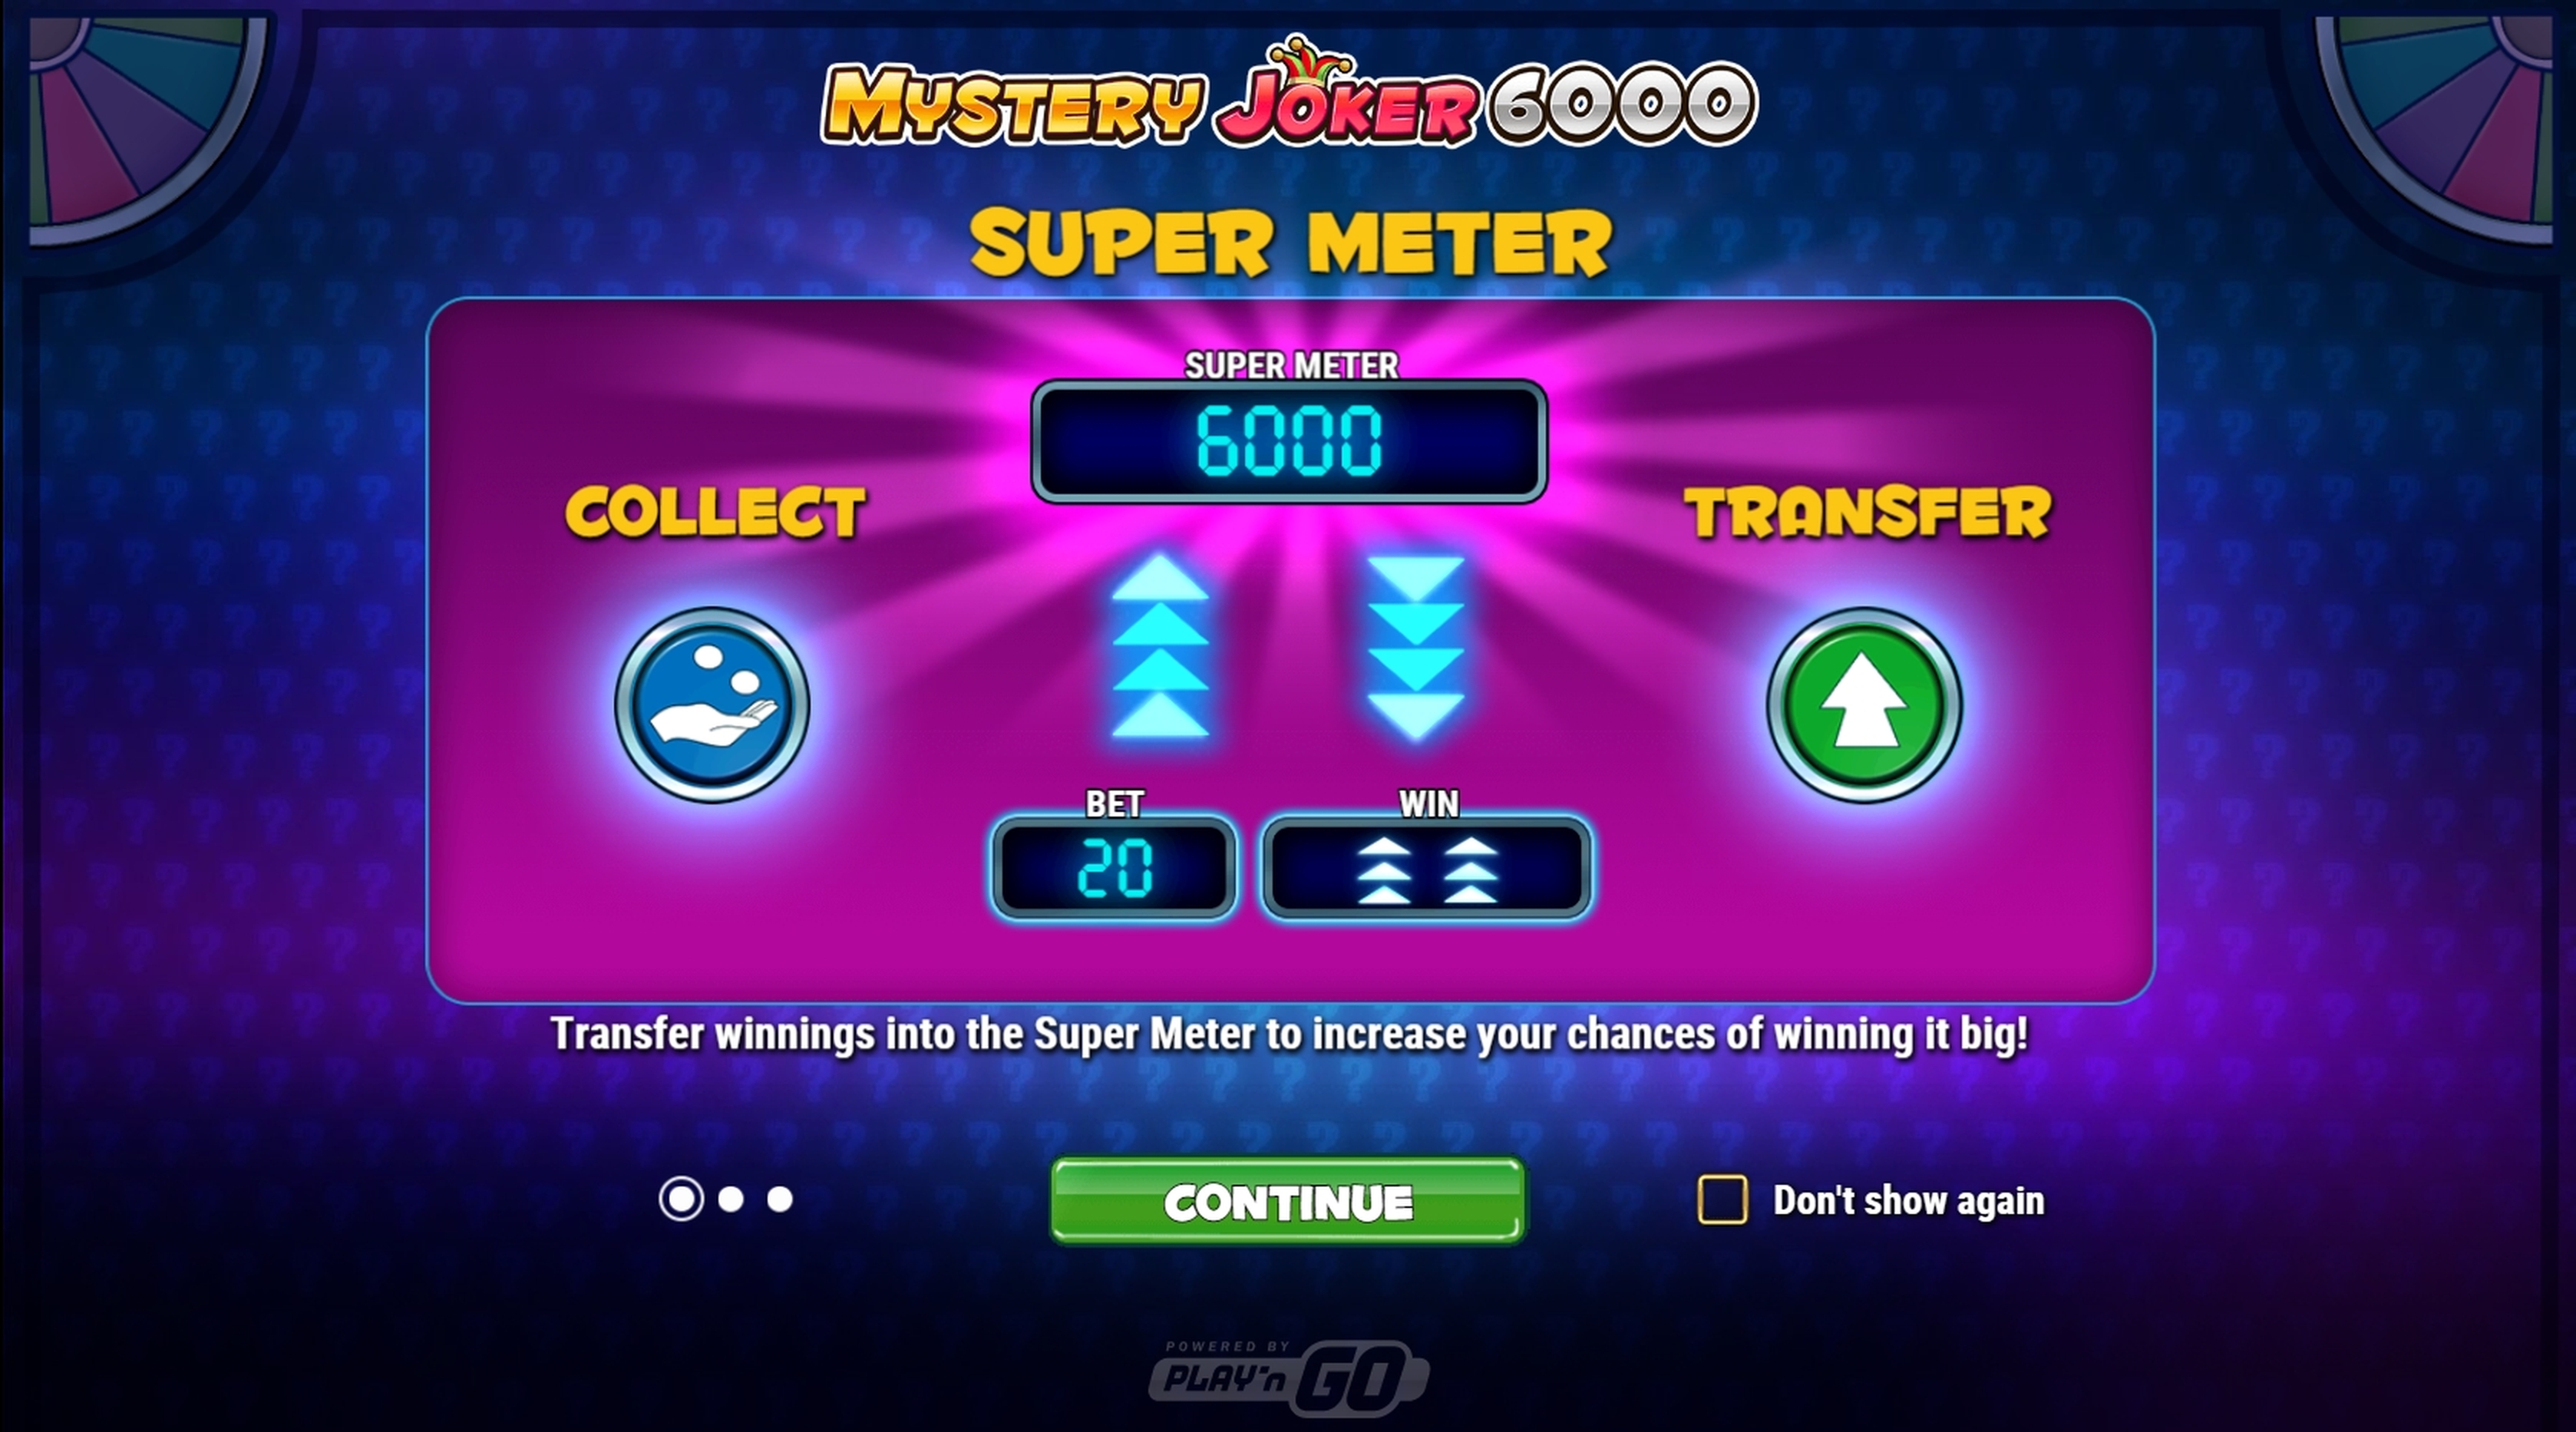 Play Mystery Joker 6000 Free Casino Slot Game by Playn GO